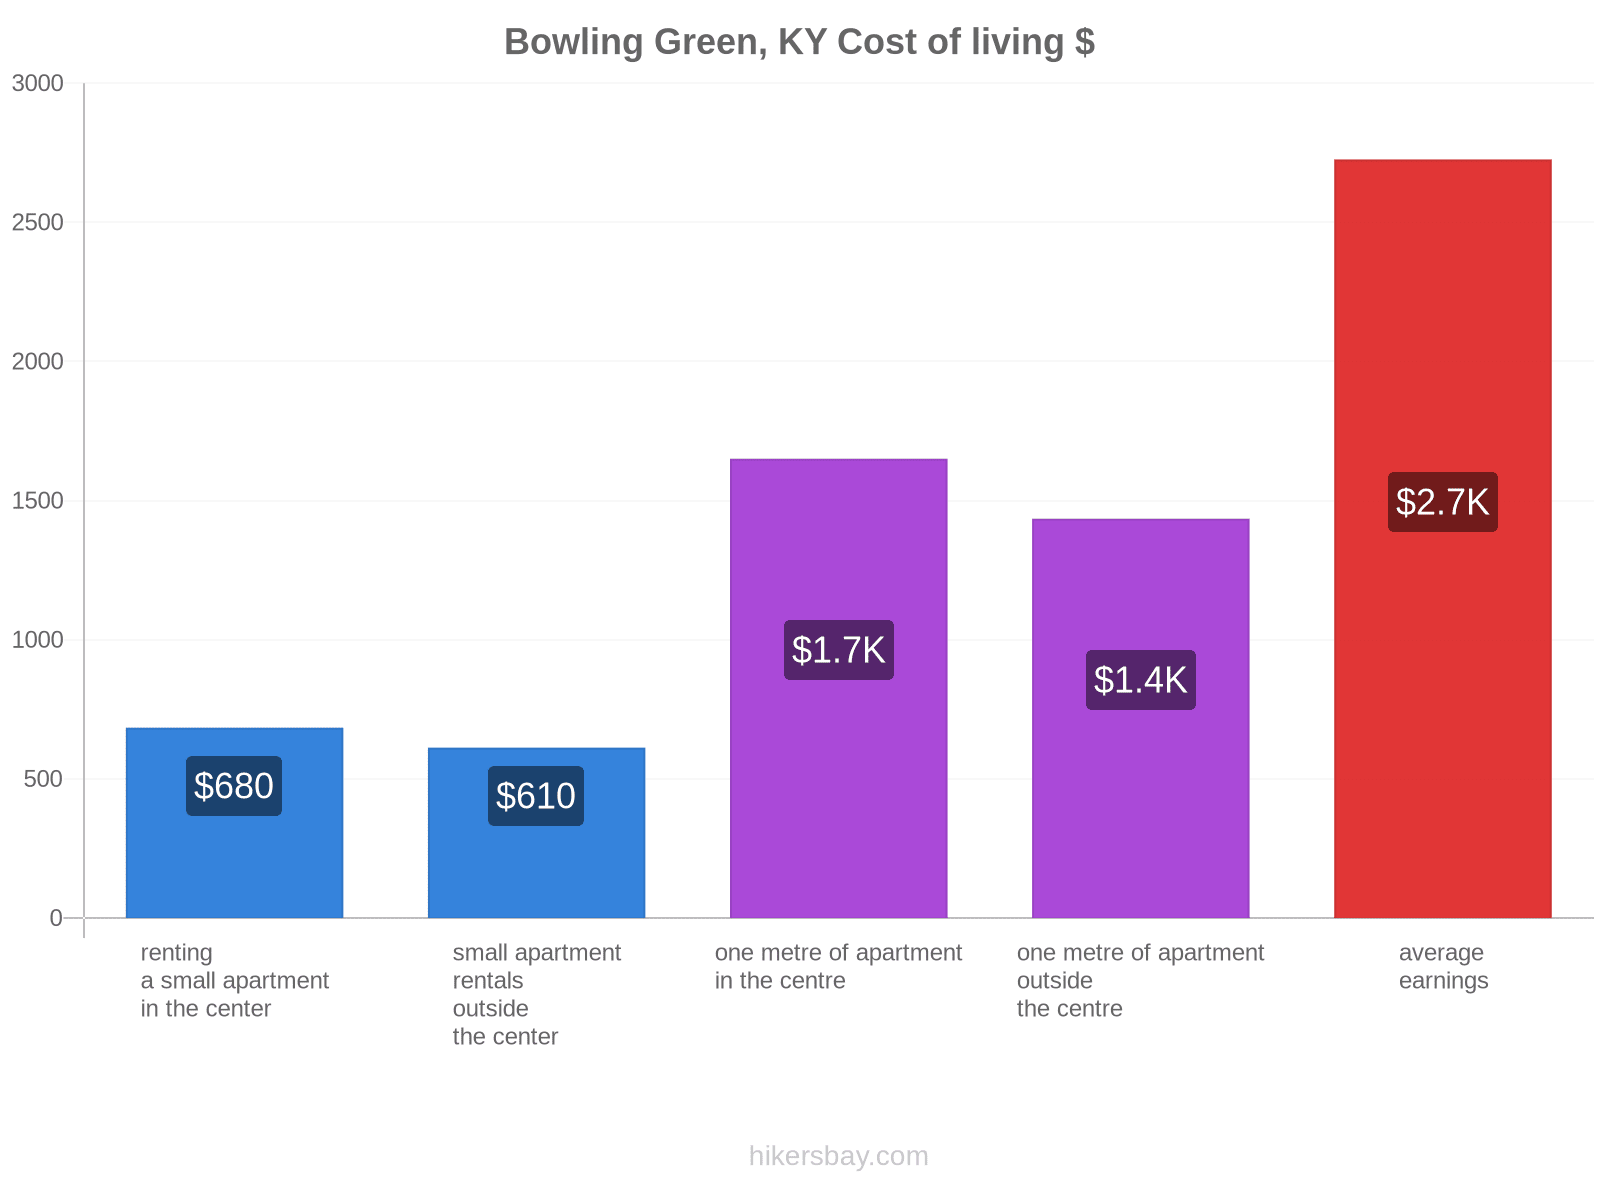 Bowling Green, KY cost of living hikersbay.com